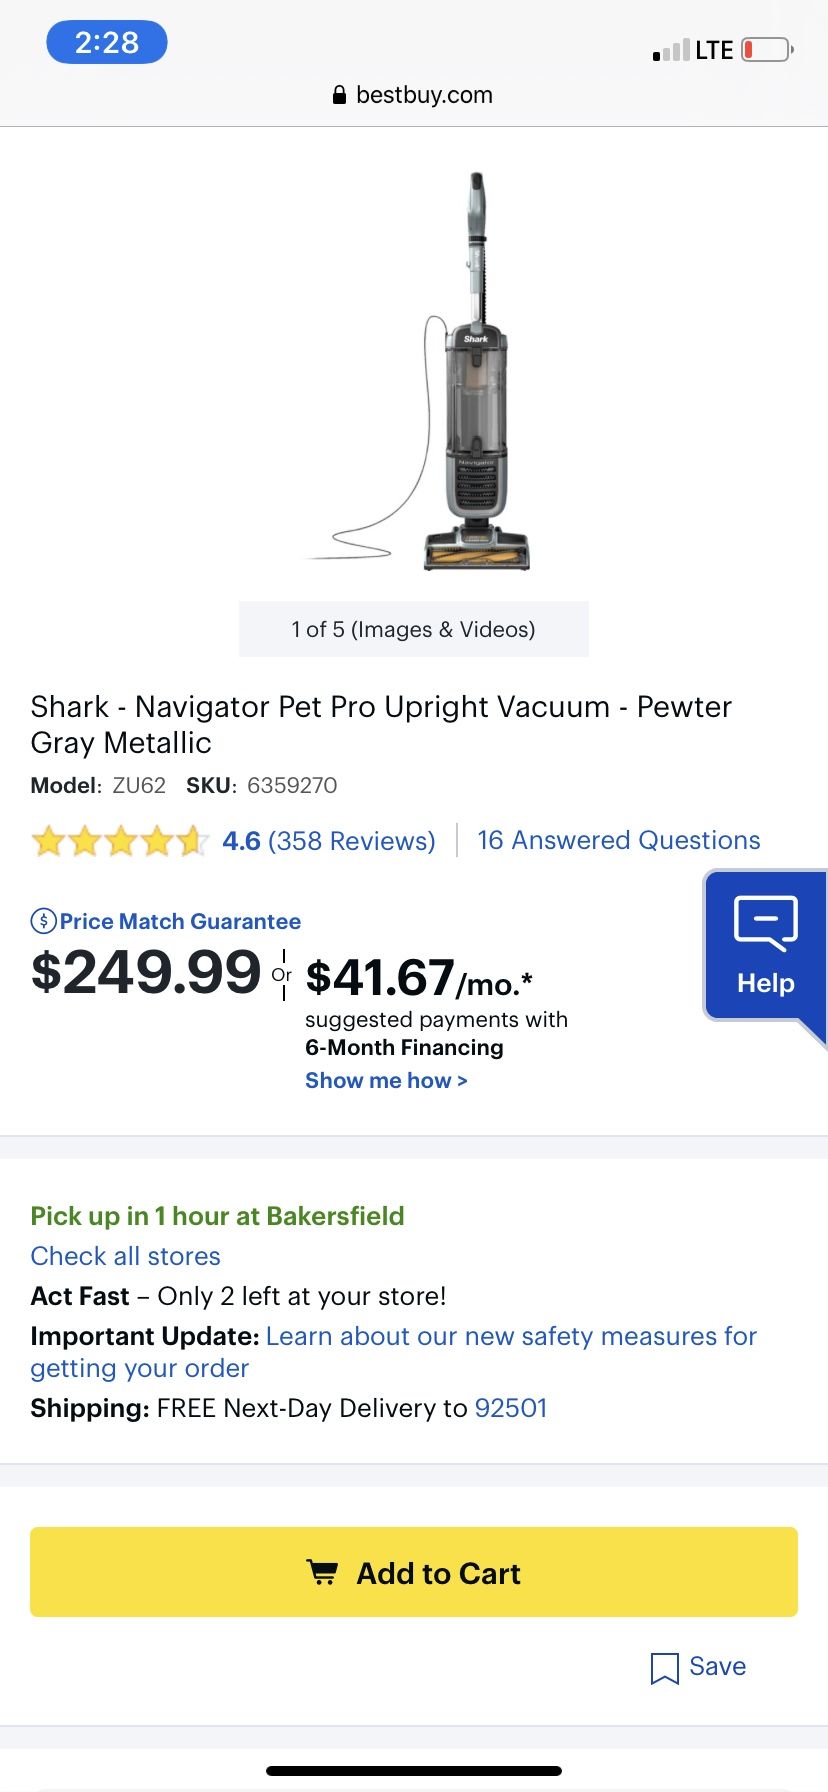 New in the box Shark - Navigator Pet Pro Upright Vacuum -